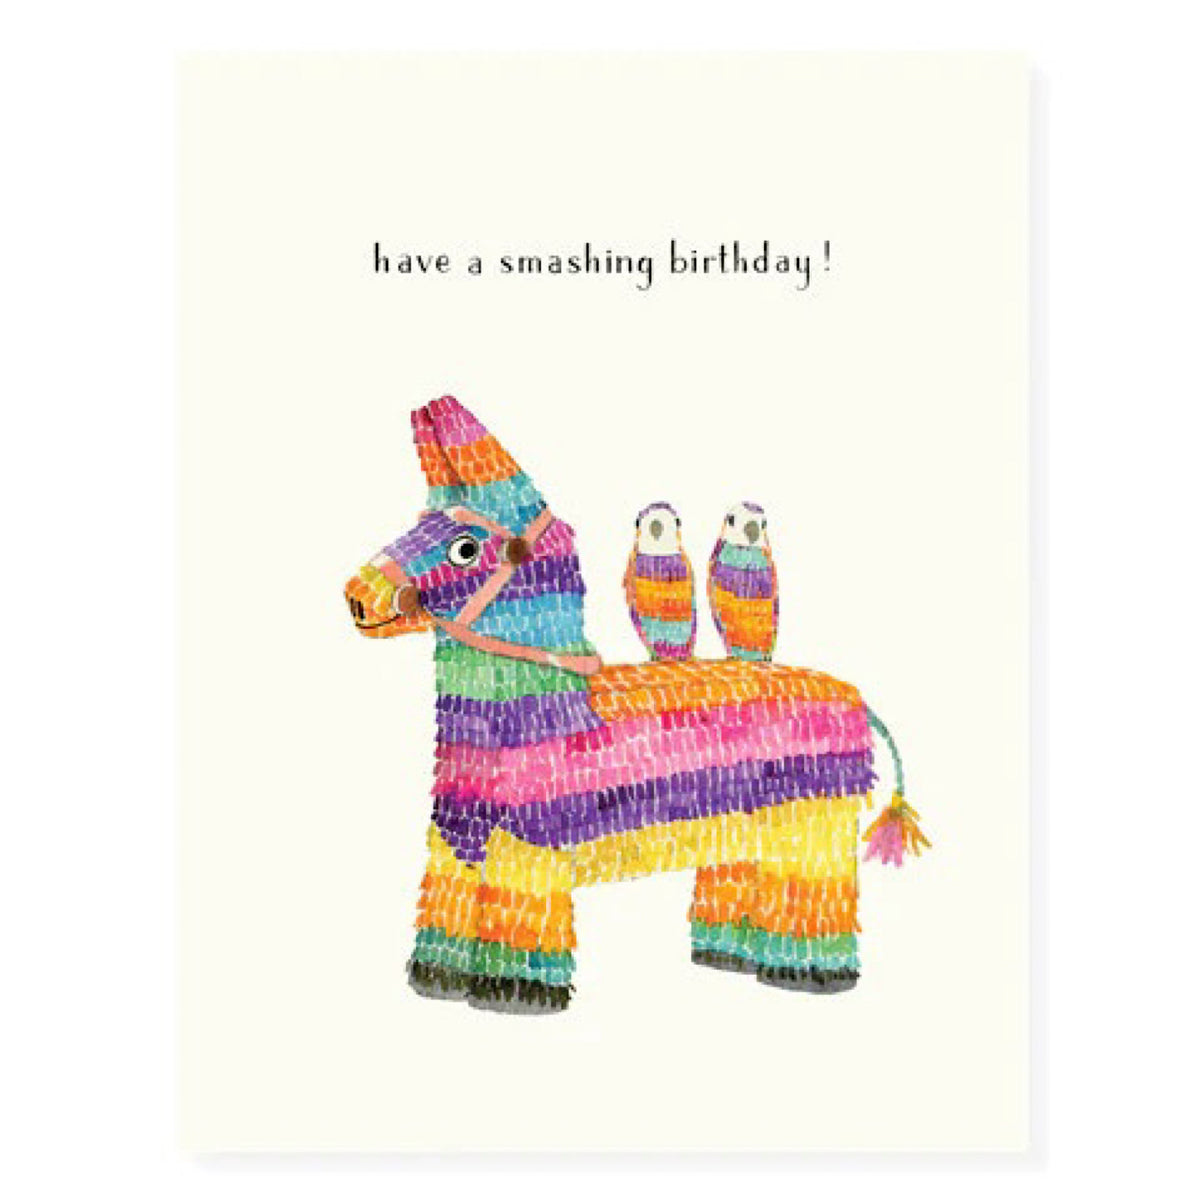 A Smashing Birthday Card